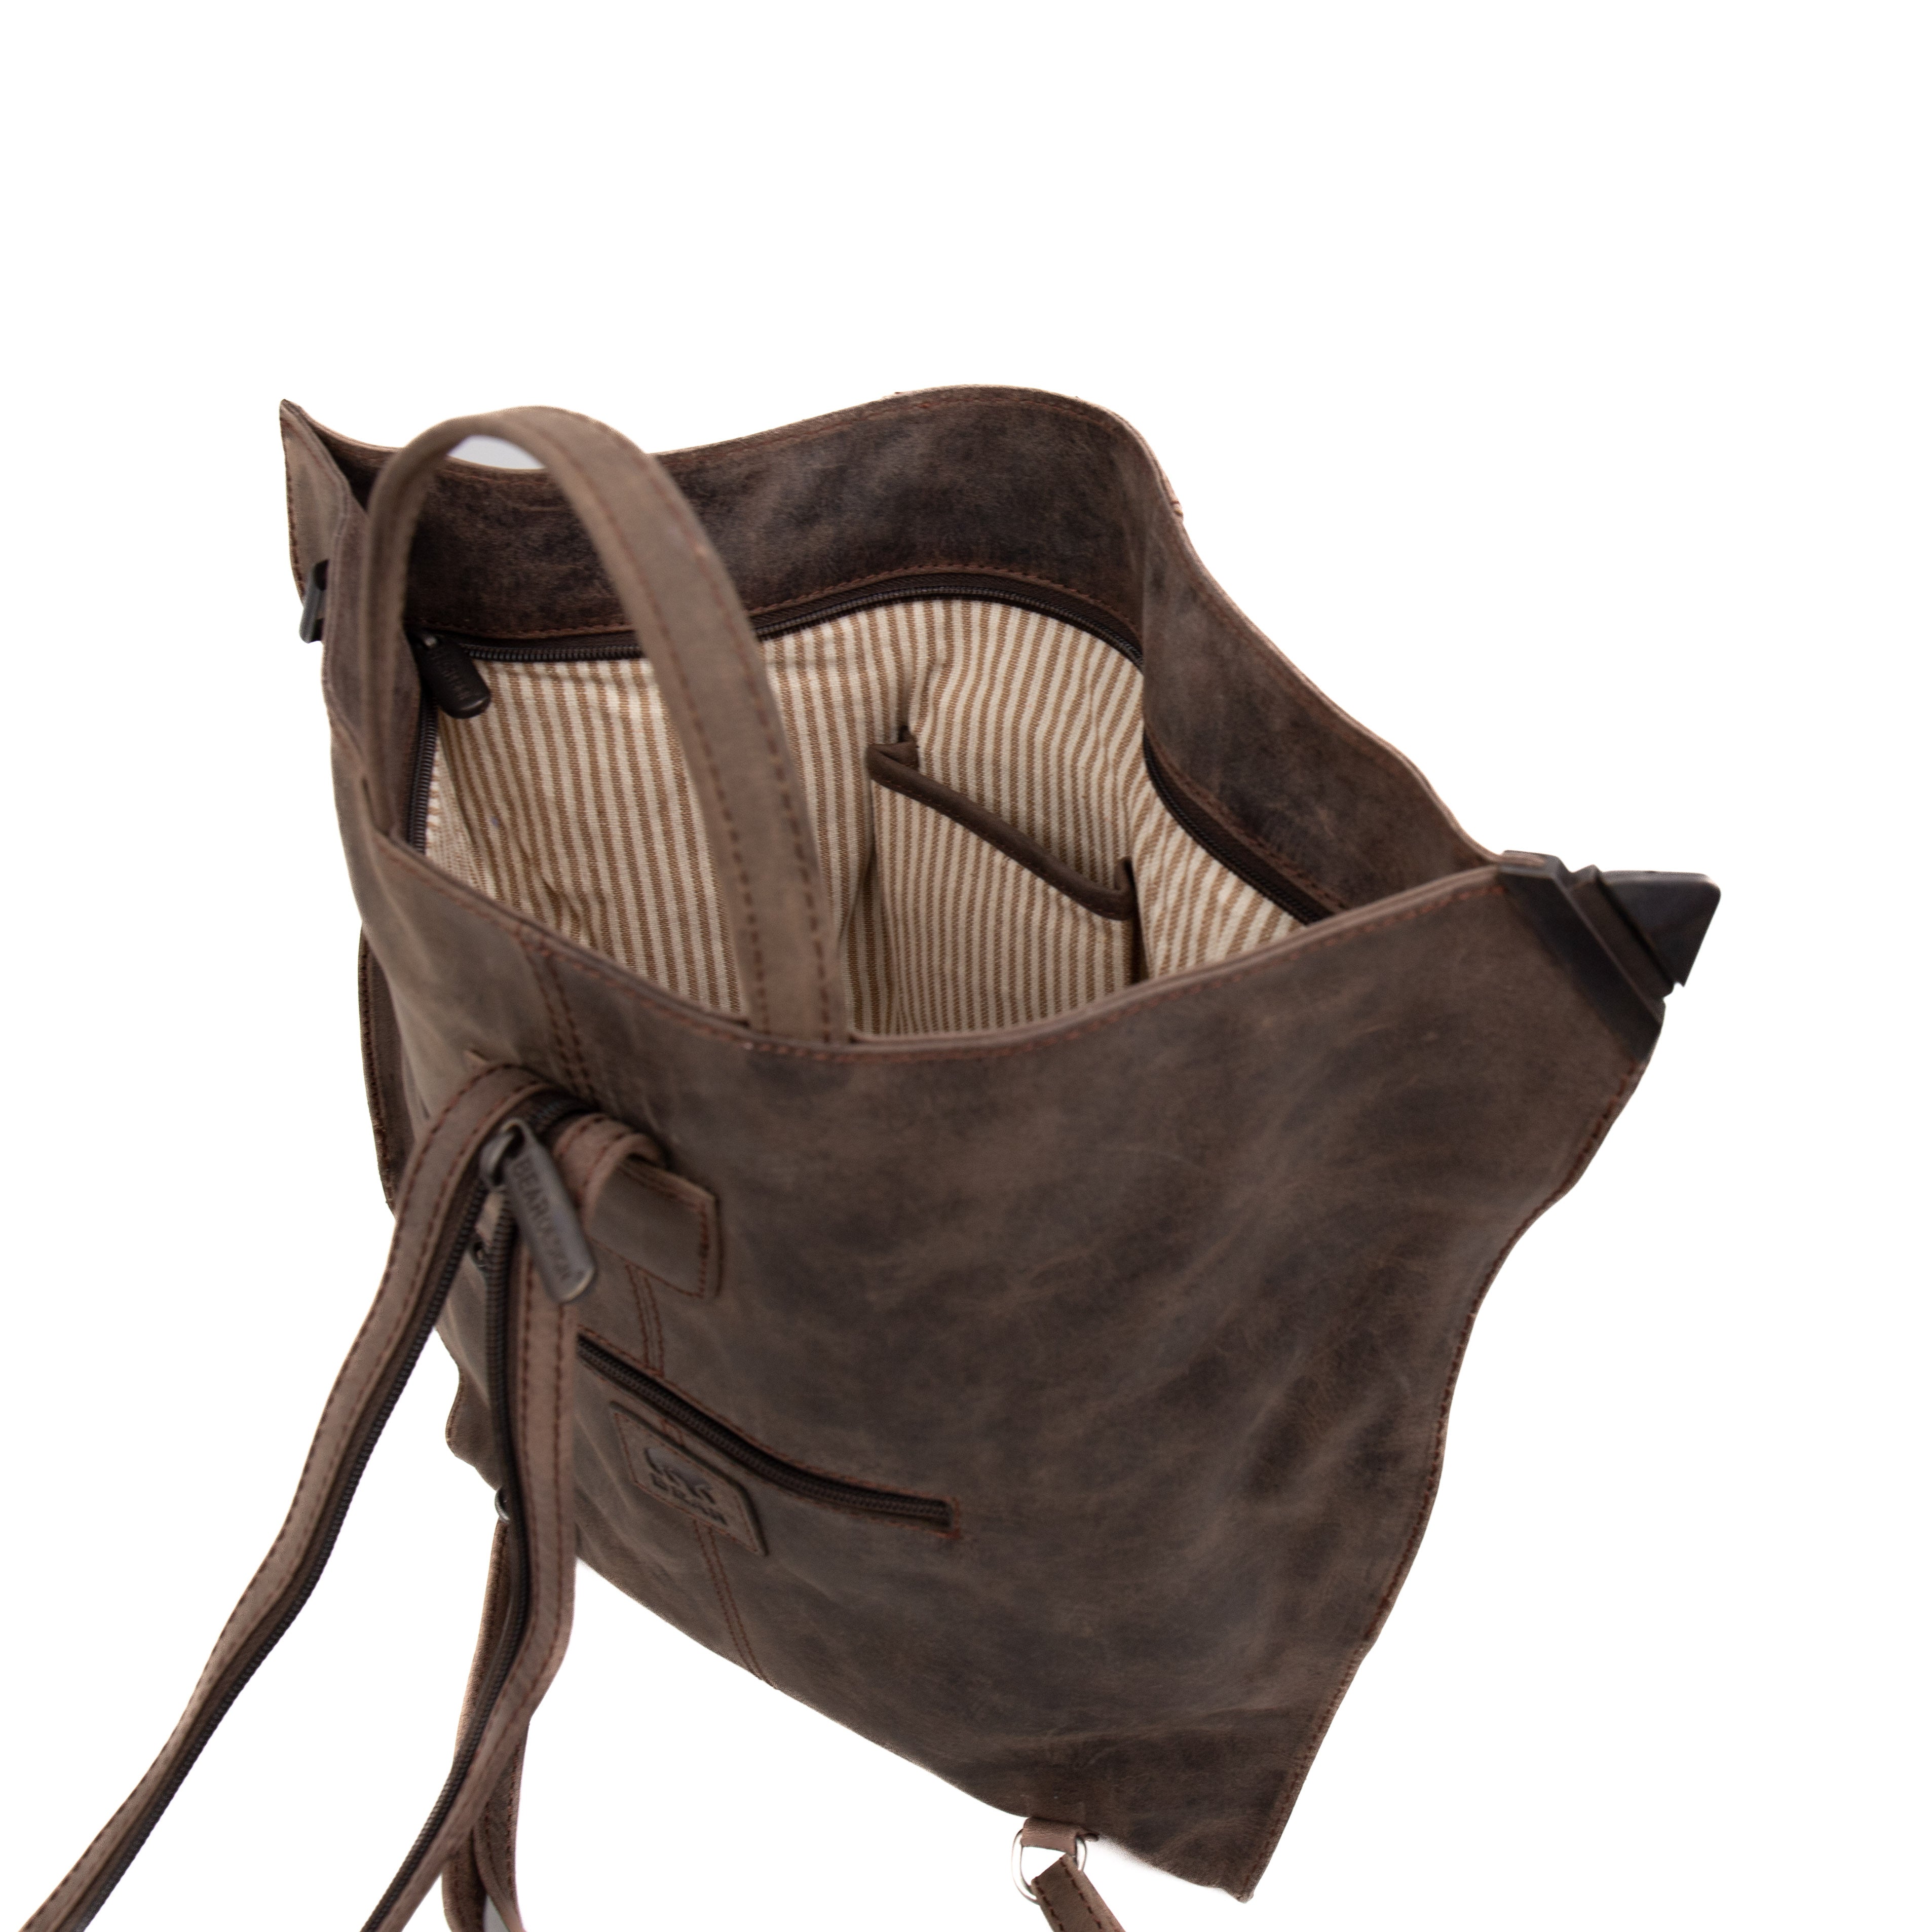 Folding backpack 'Lisa' brown - HD 6150